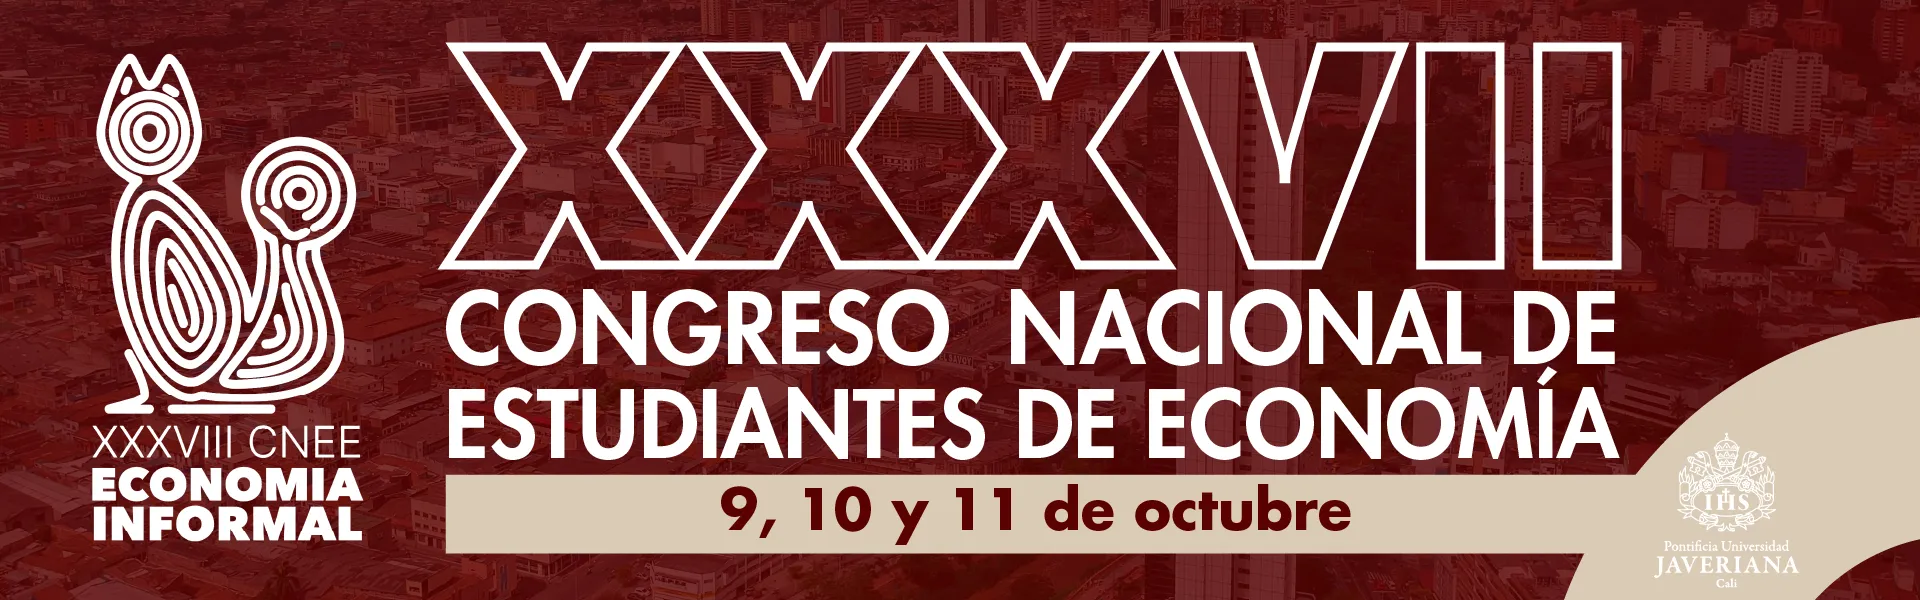 XXXVII Congreso Nacional de Estudiantes de Economía